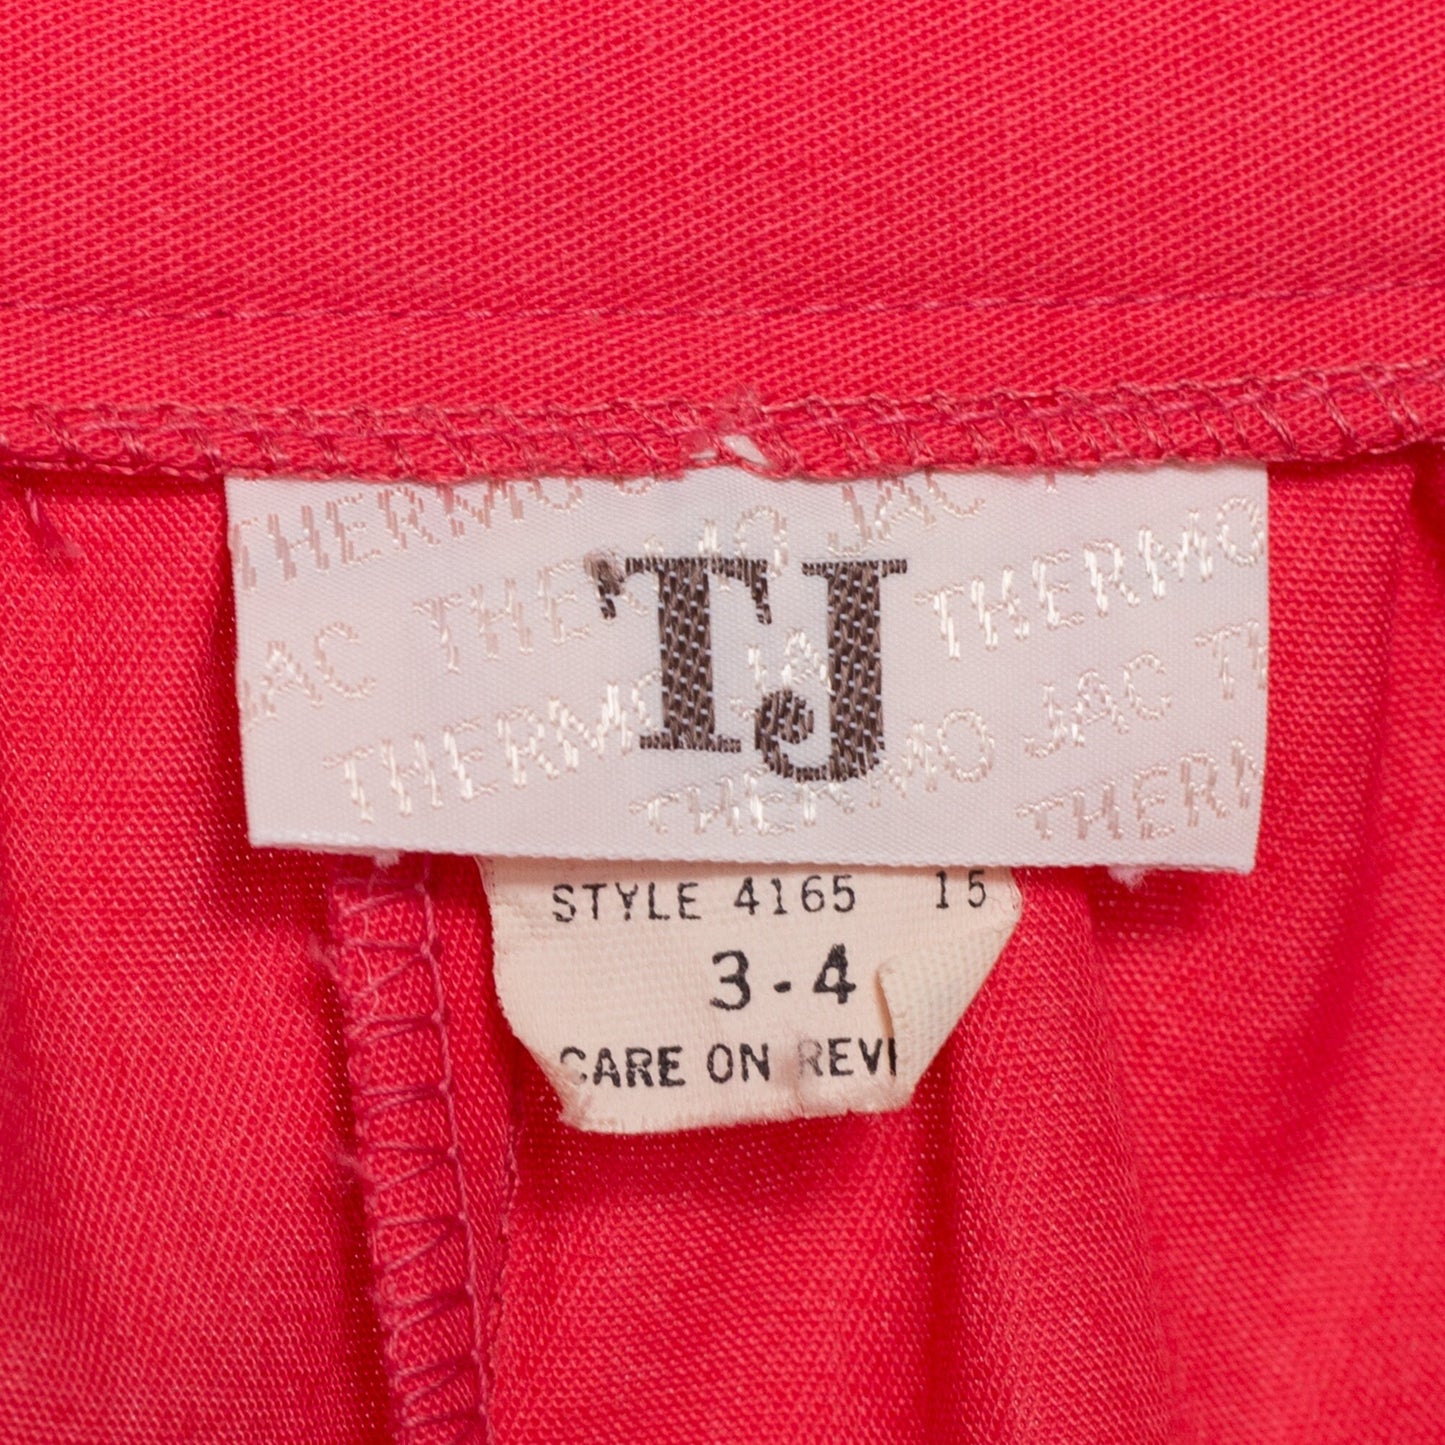 XS| 70s Salmon Pink High Waisted Culotte Skort - Extra Small, 23.5" | Retro Vintage Pantskirt Long Shorts